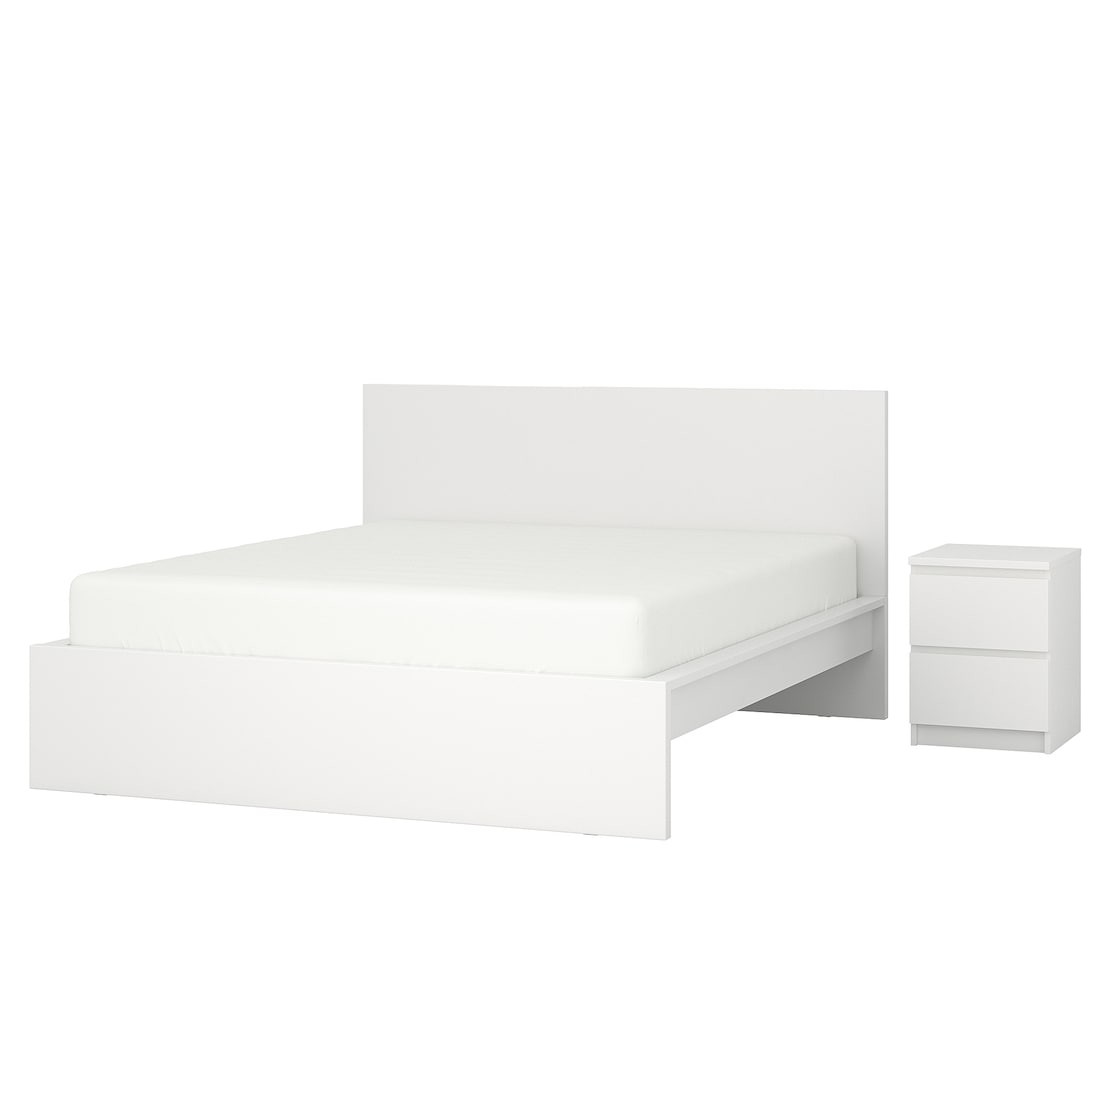 MALM МАЛЬМ Мебель для спальни, комплект 2 шт., белый, 160x200 см